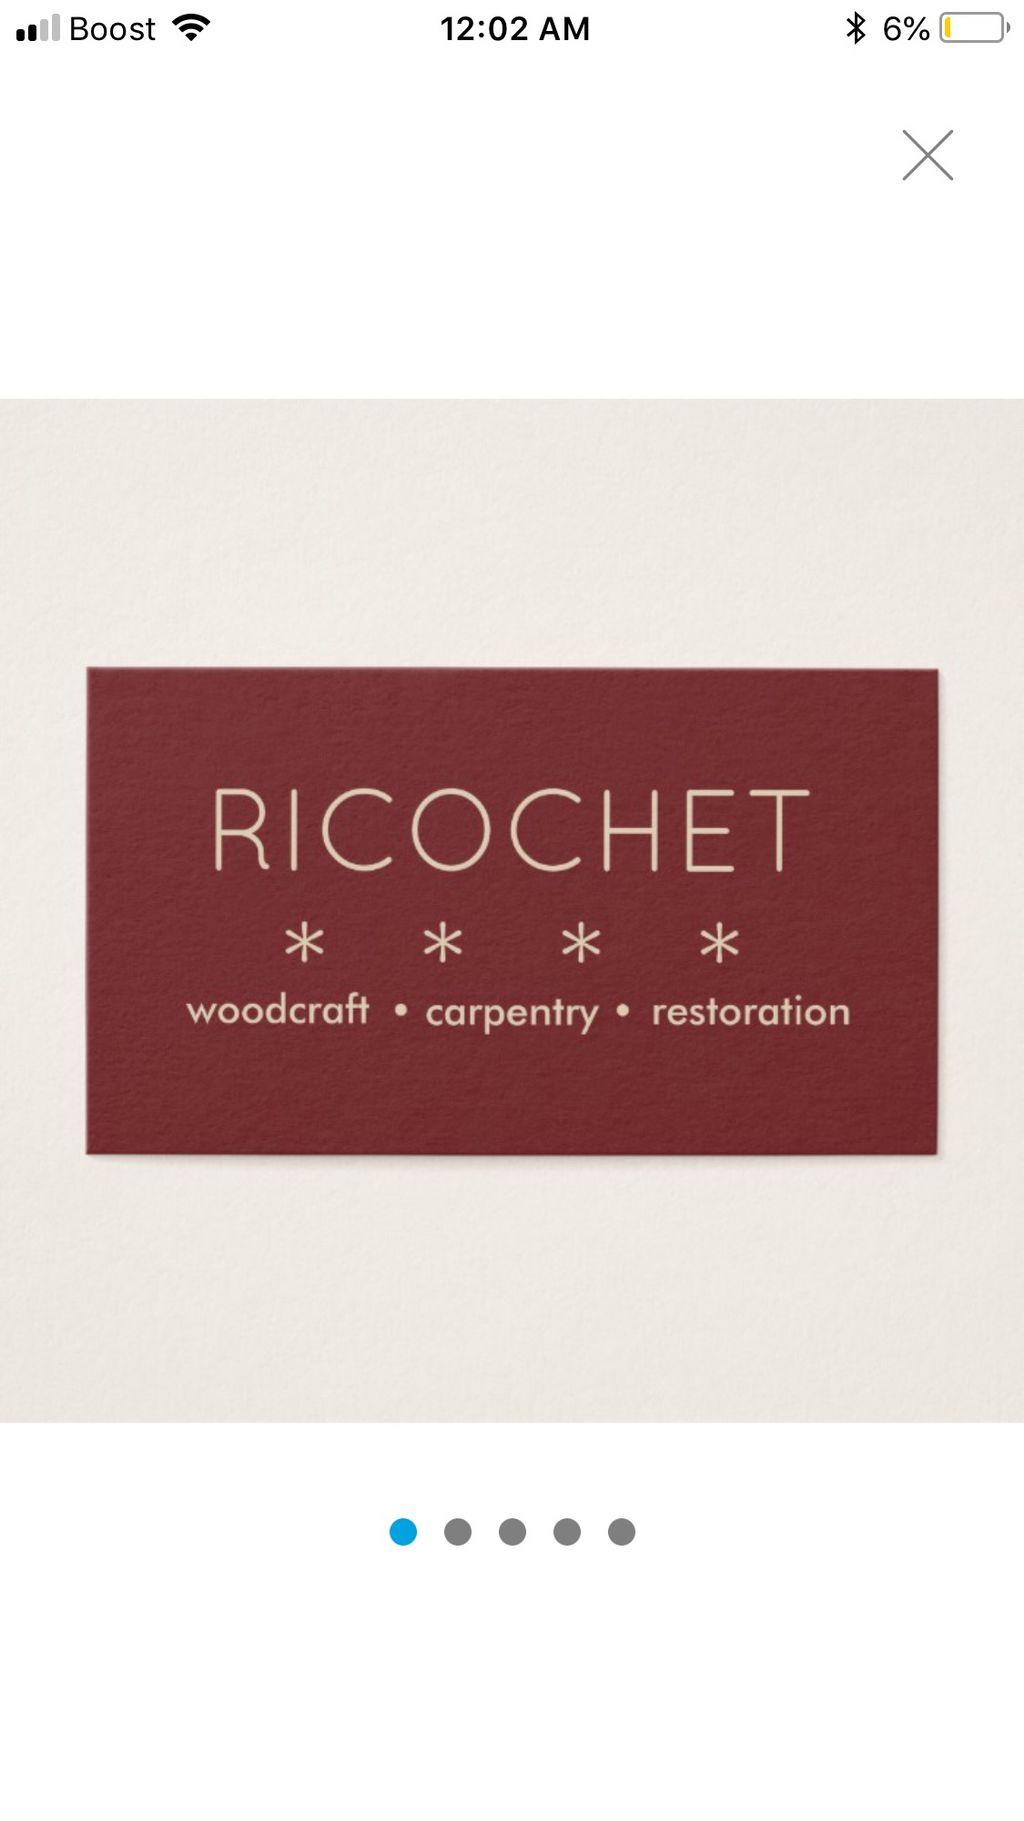 Ricochet Carpentry LLC